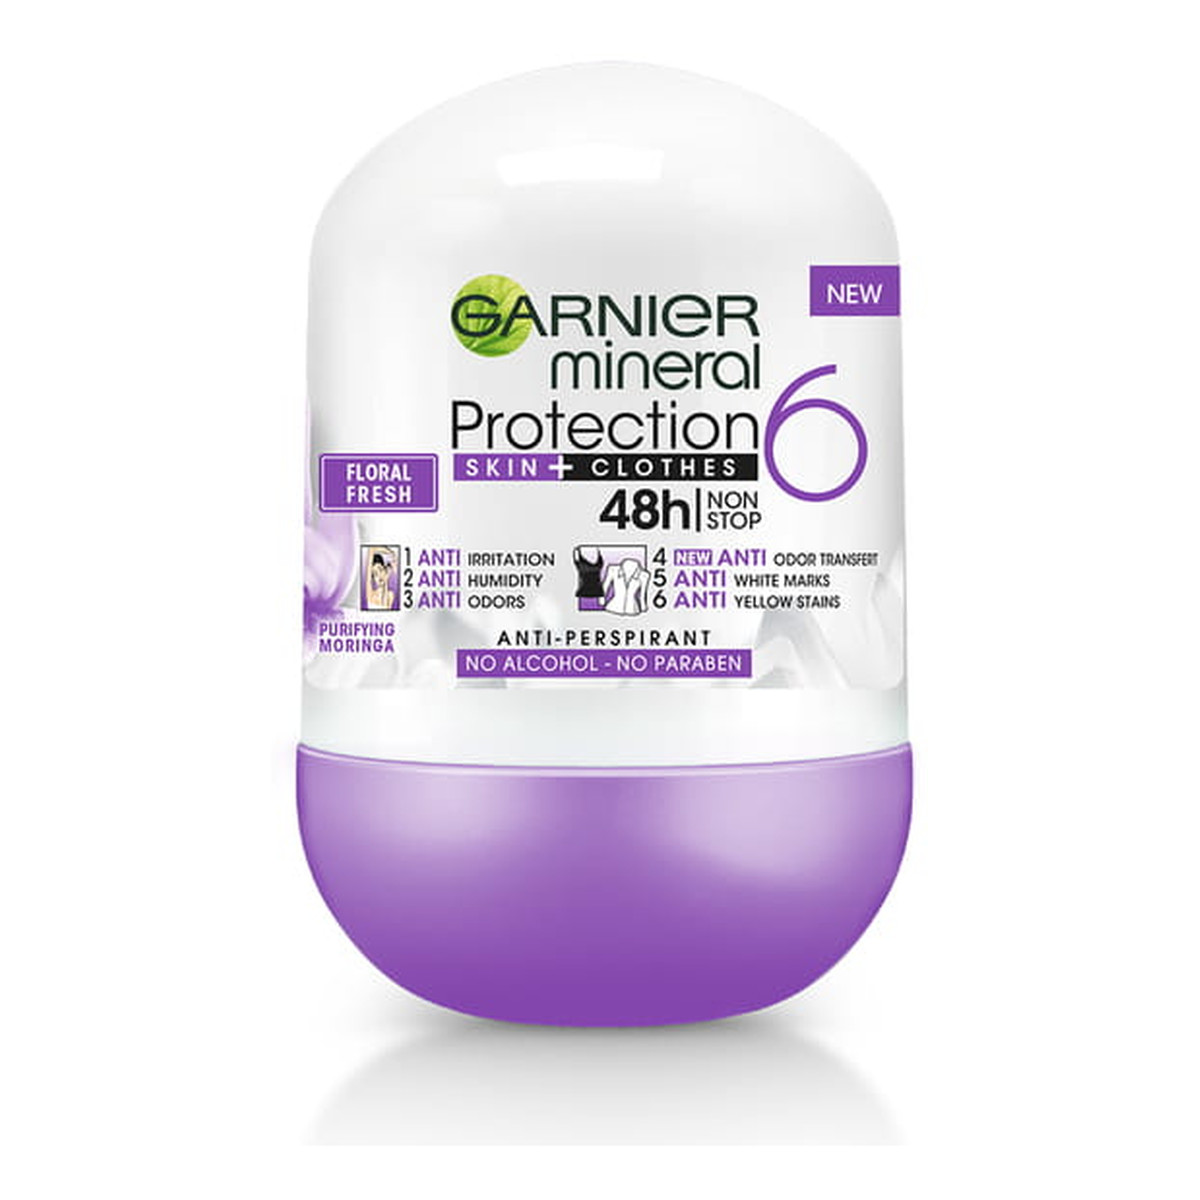 Garnier Mineral Protection "6" Dezodorant w kulce Floral Fresh